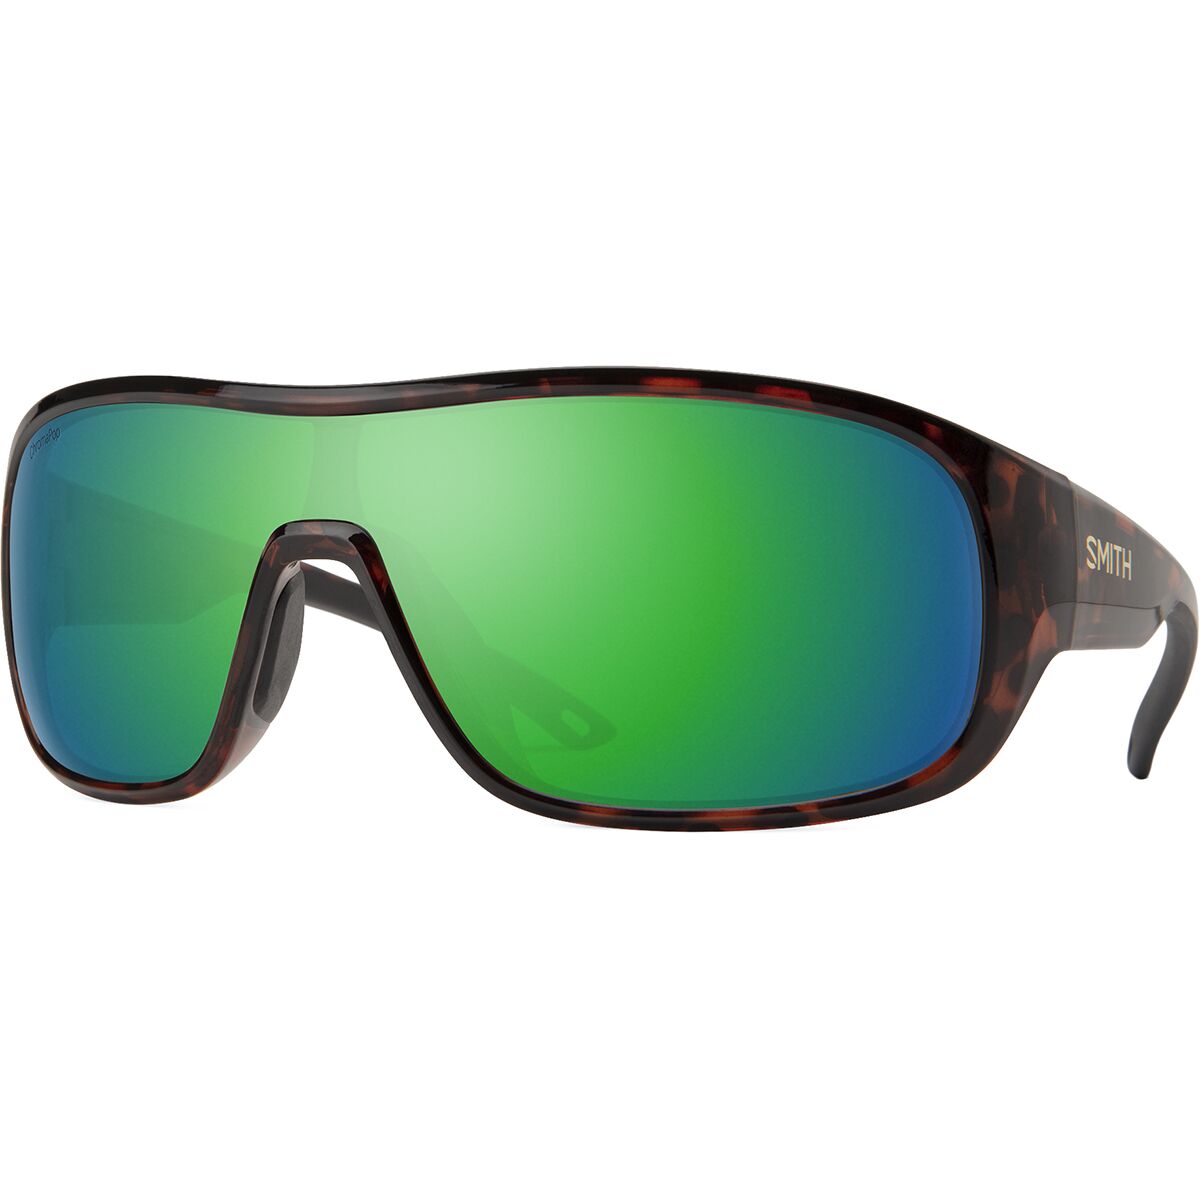 Smith Spinner Sunglasses Tortoise ChromaPop Polarized Green Mirror